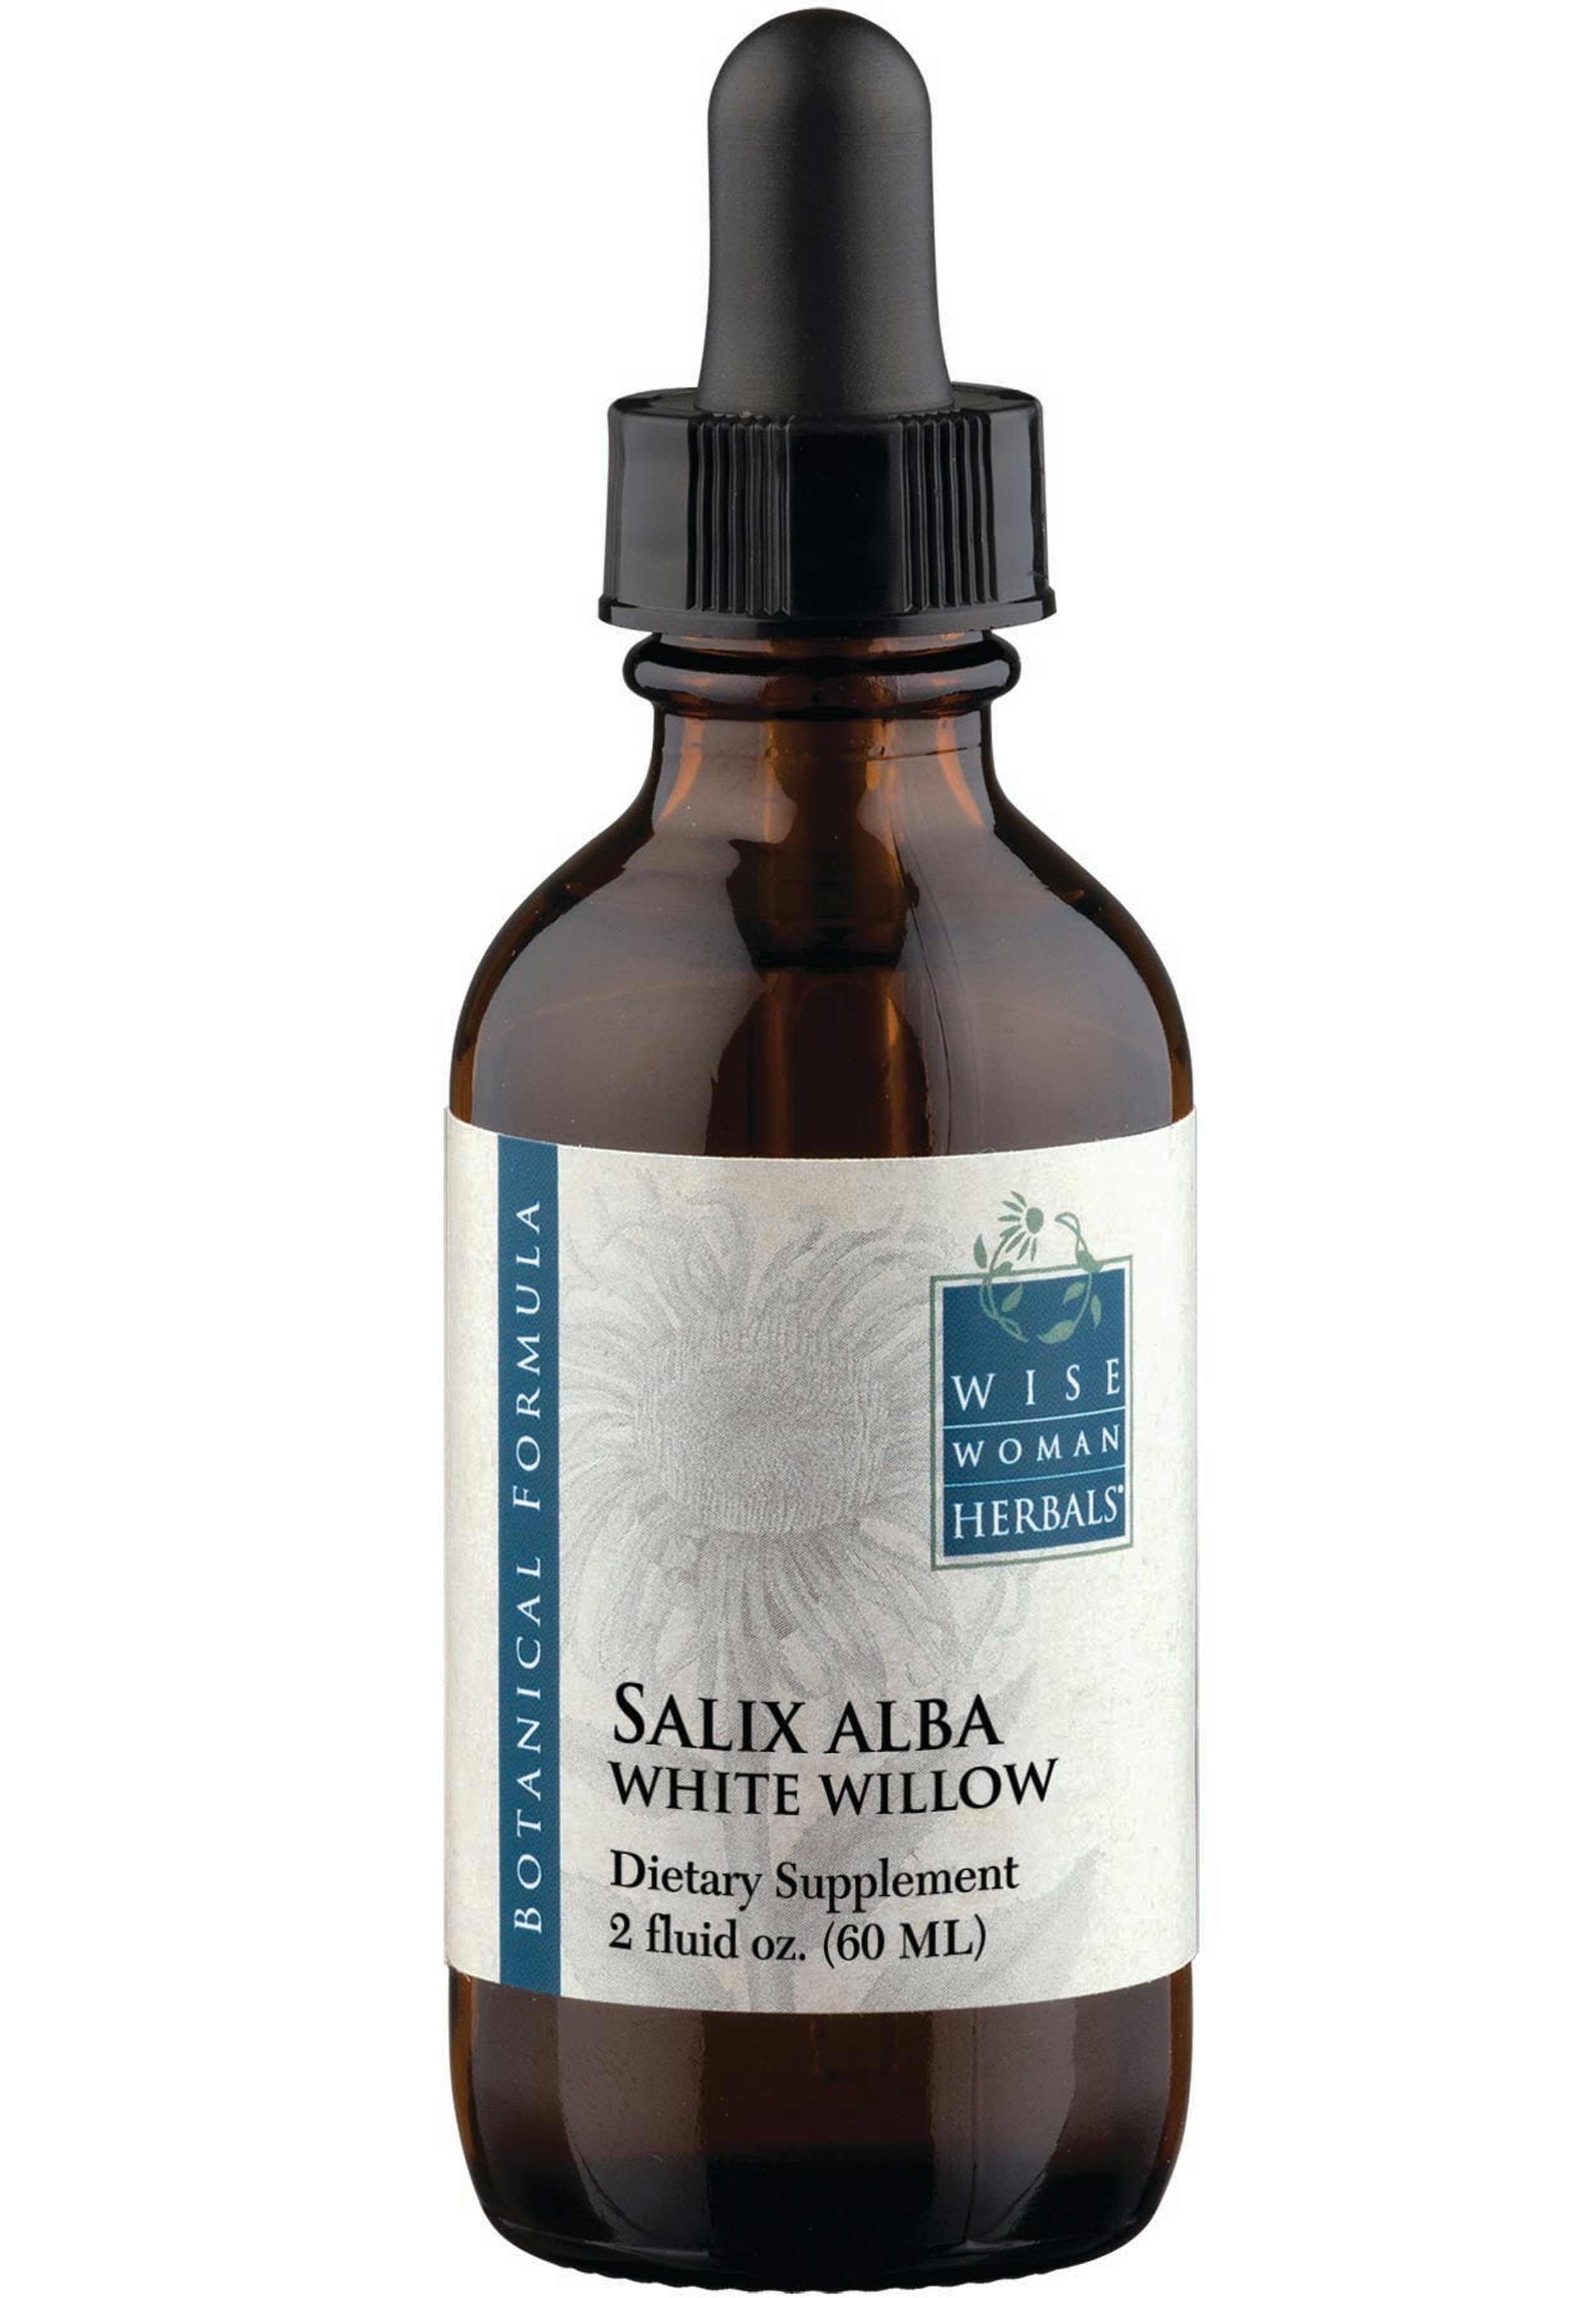 Wise Woman Herbals Salix Alba White Willow